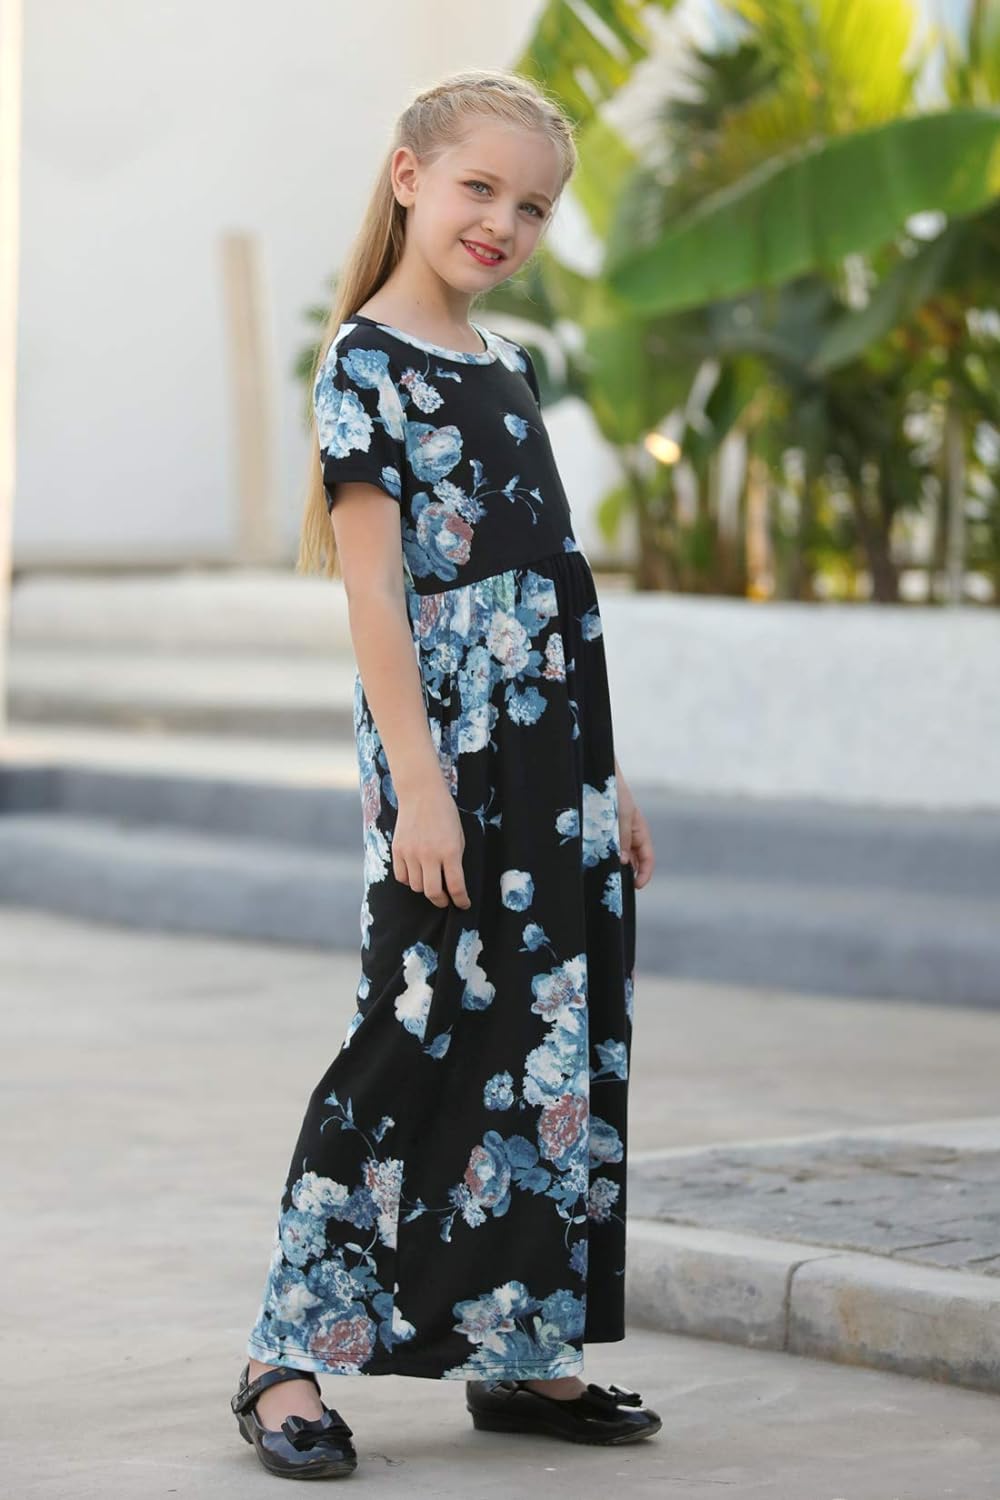 GORLYA Girls Short Sleeve Floral Print Loose Casual Holiday Long Maxi Dress with Pockets 4-12 Years 